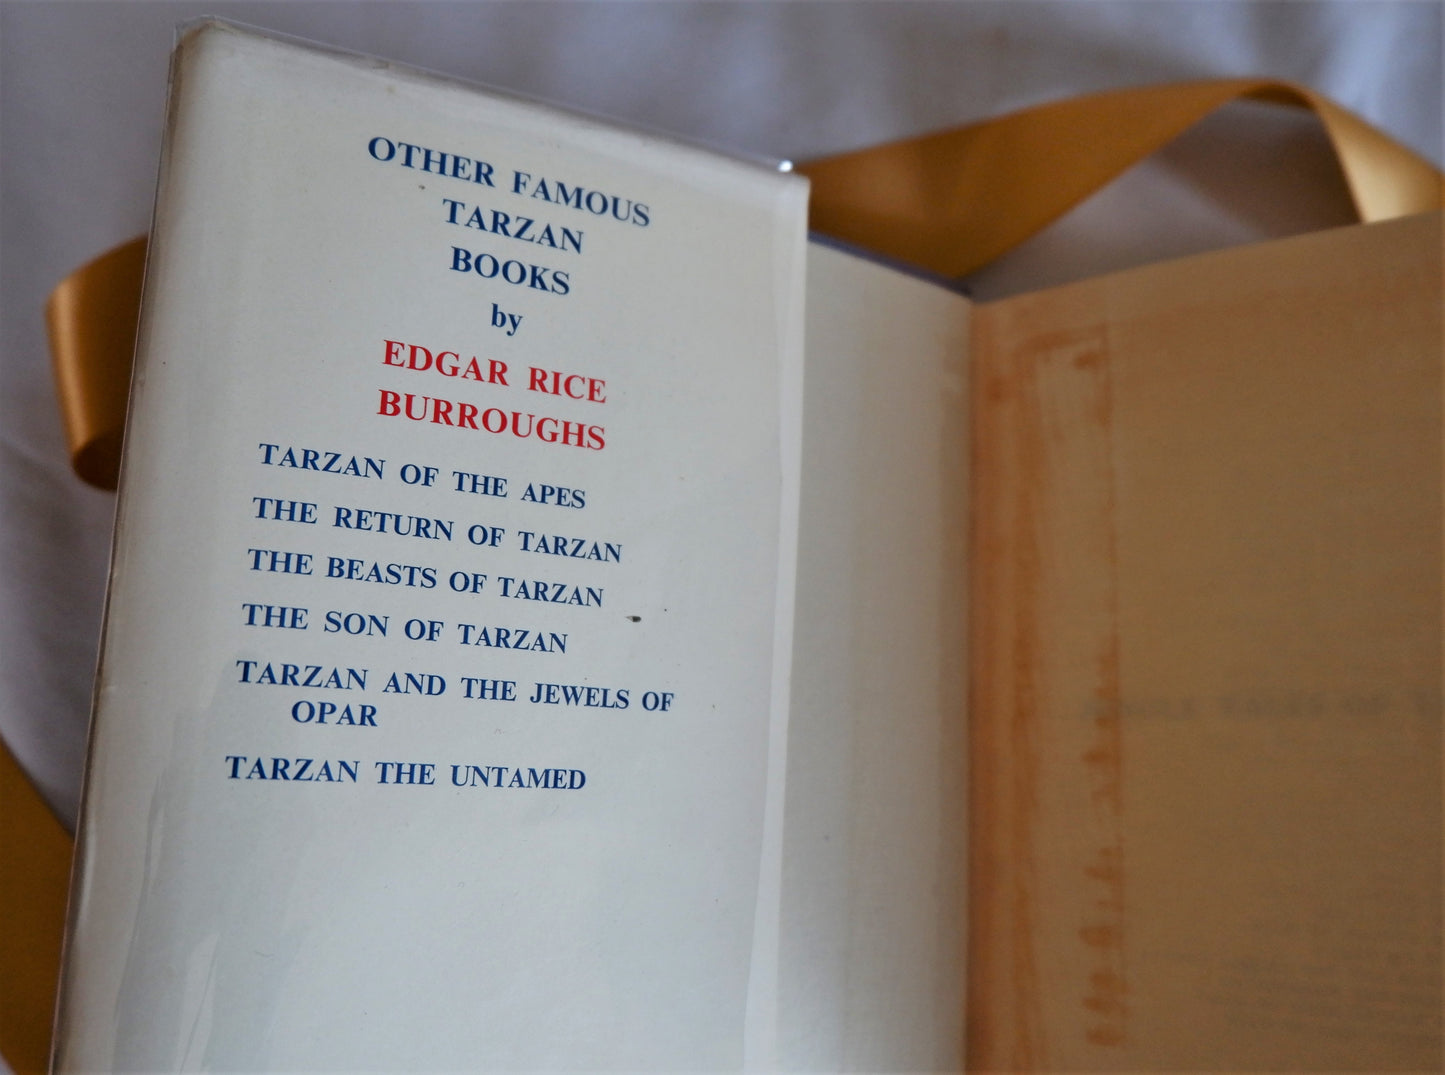 1949 Jungle Tales of Tarzan by Edgar Rice Burroughs / Methuen & Co., London / Vintage Hardback With Original Dust Jacket